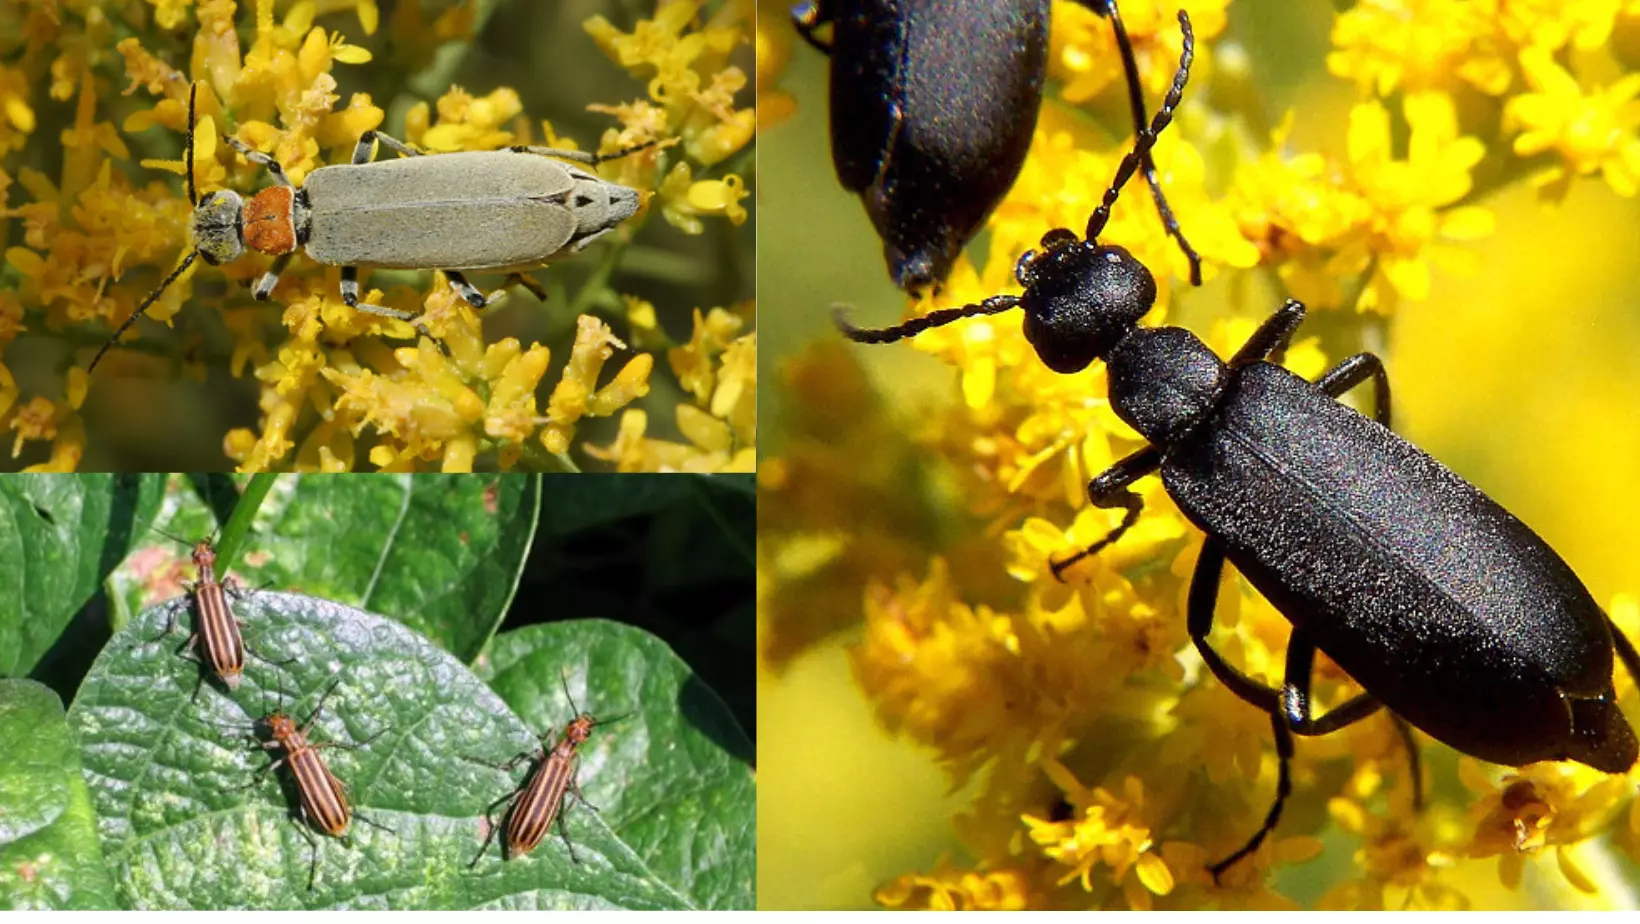 blister-beetles-epicauta-spp